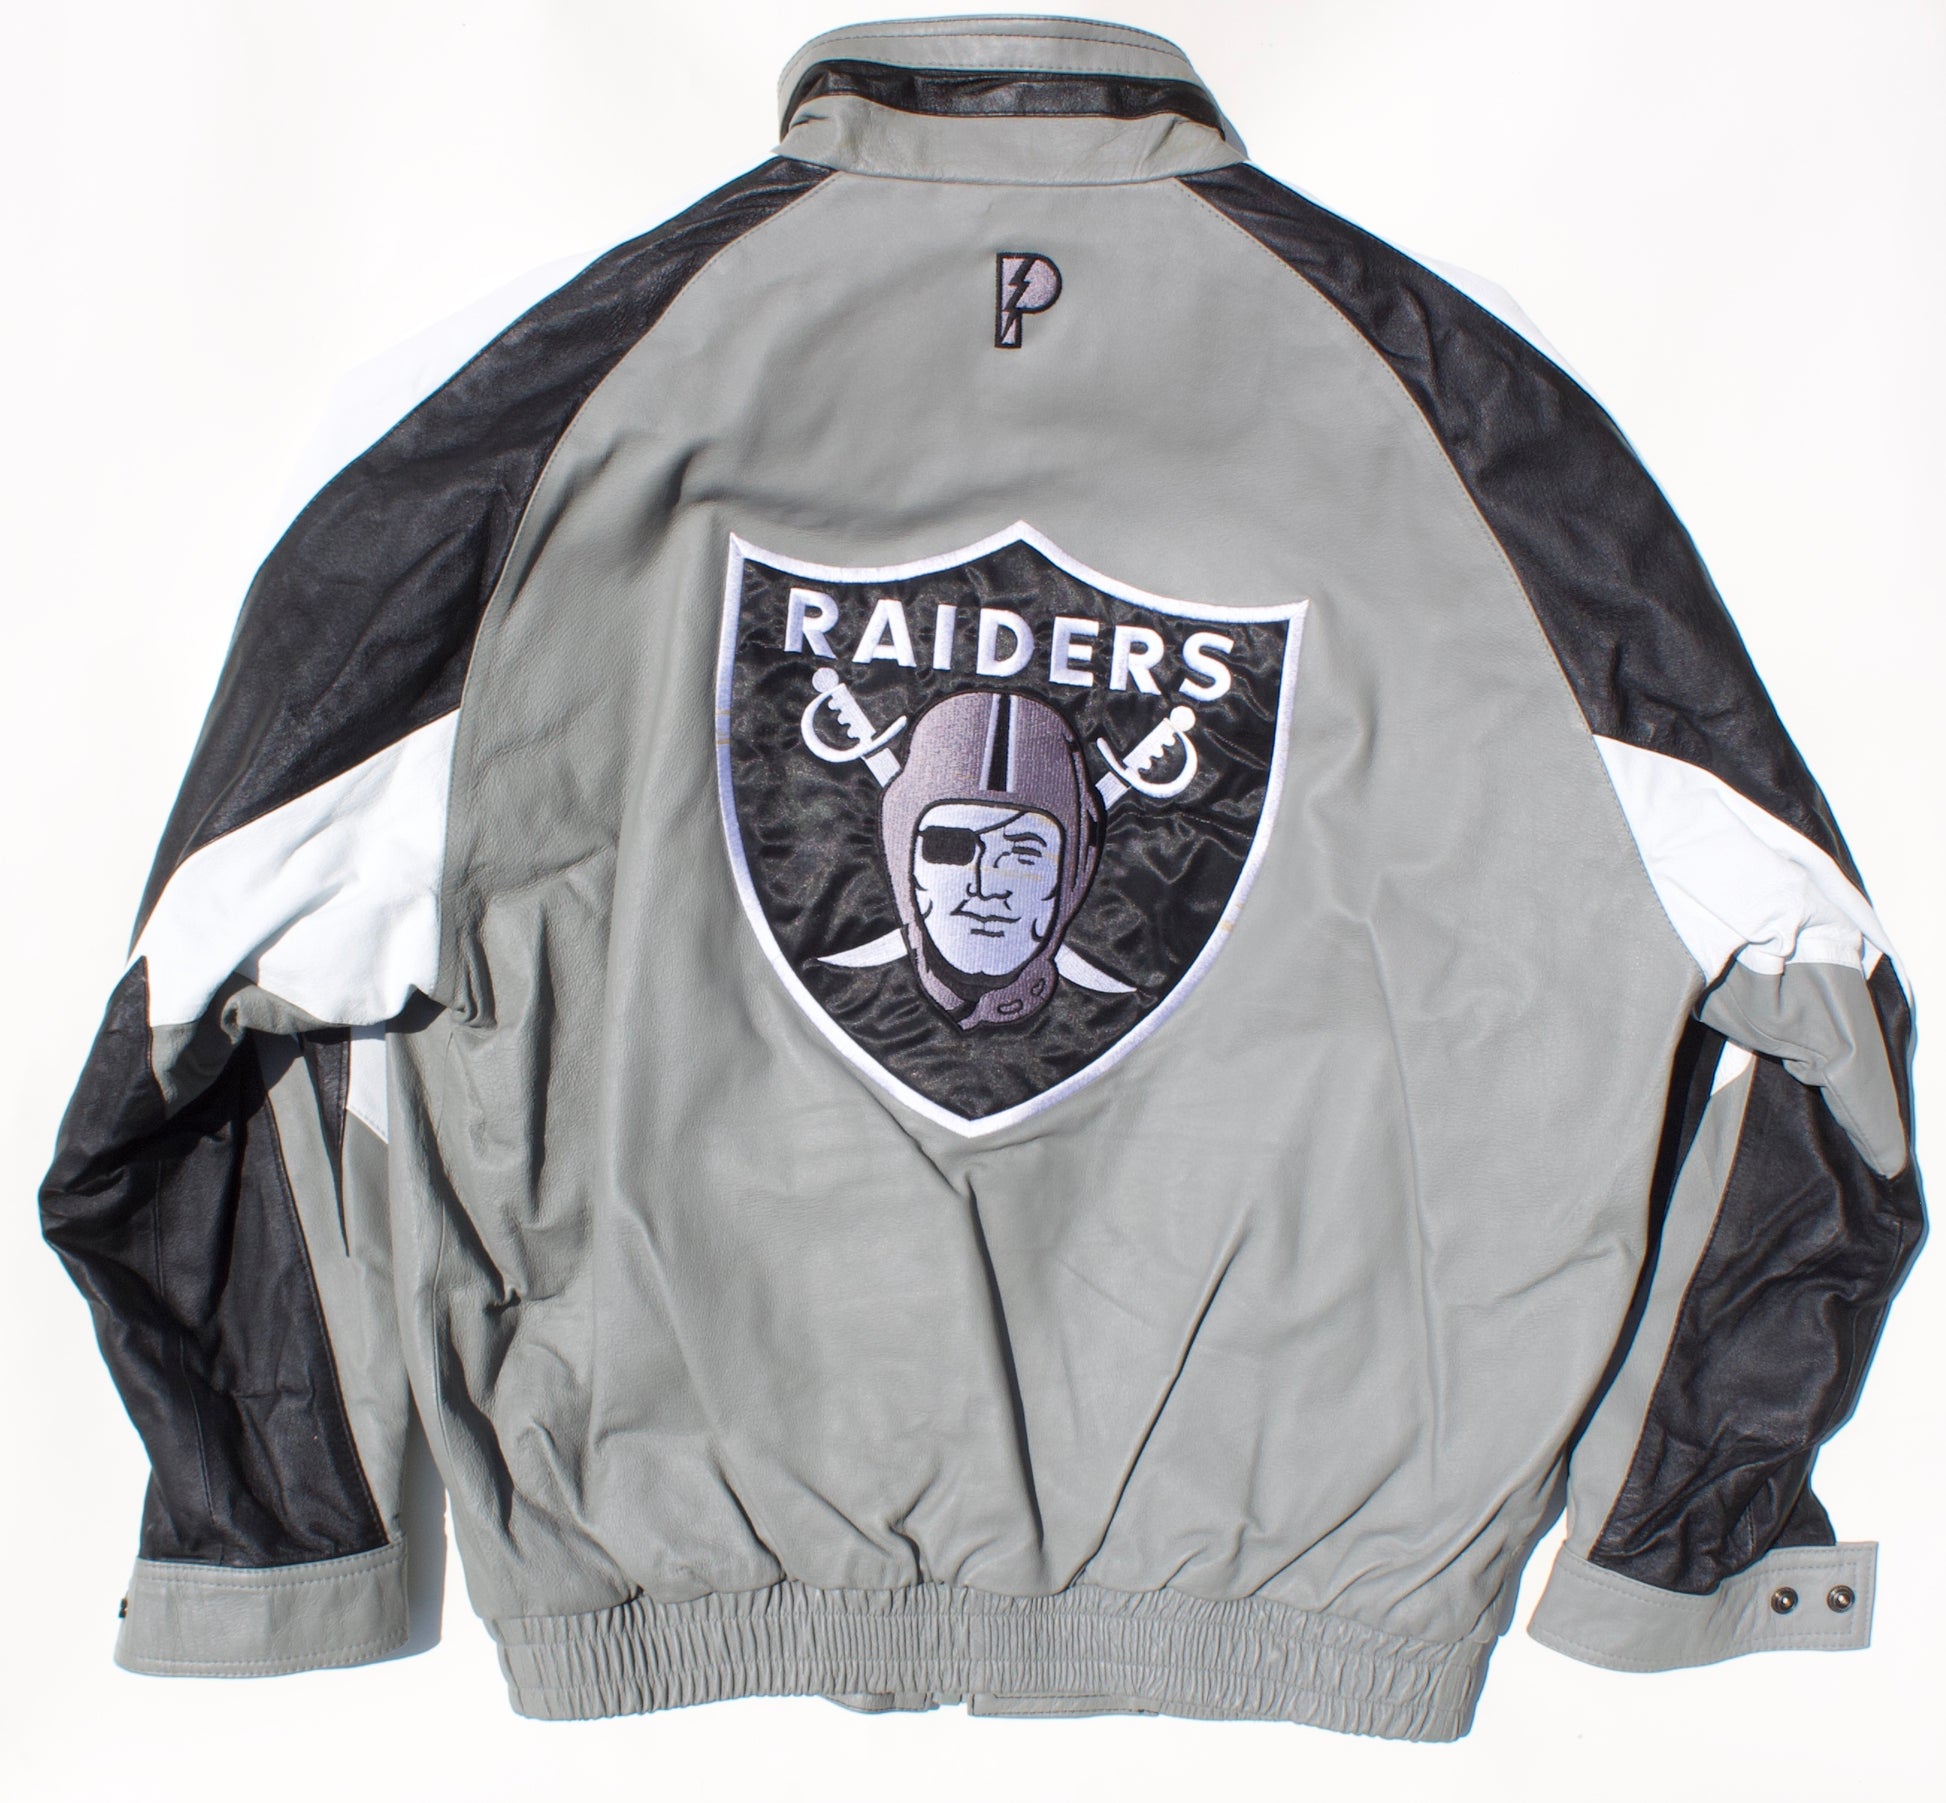 Raiders Starter Jacket